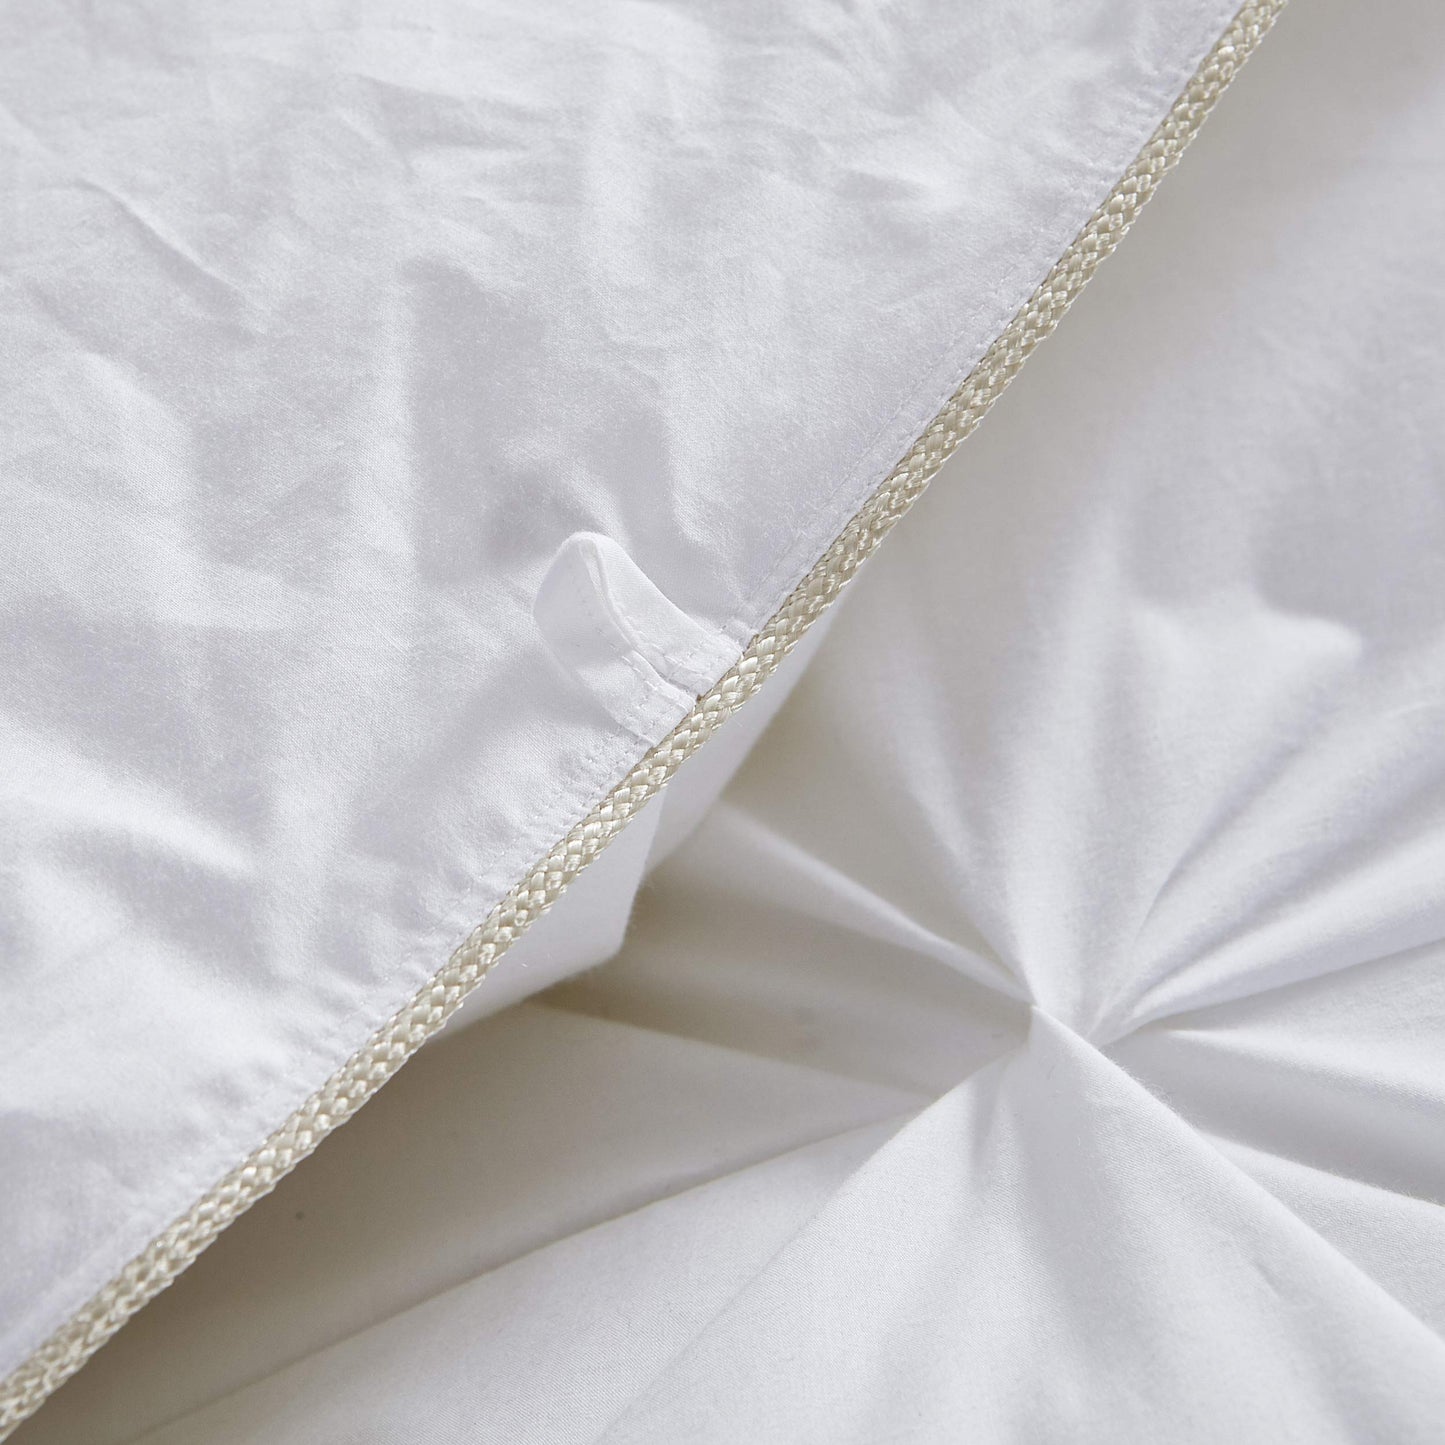 Luxurious All-Season Goose Down Feather Fiber Comforter Twin Size Duvet Insert, Exquisite Pinch Pleat Design, Premium Baffle Box, 100% Egyptian Cotton Cover, 50 oz. Fill Weight, White